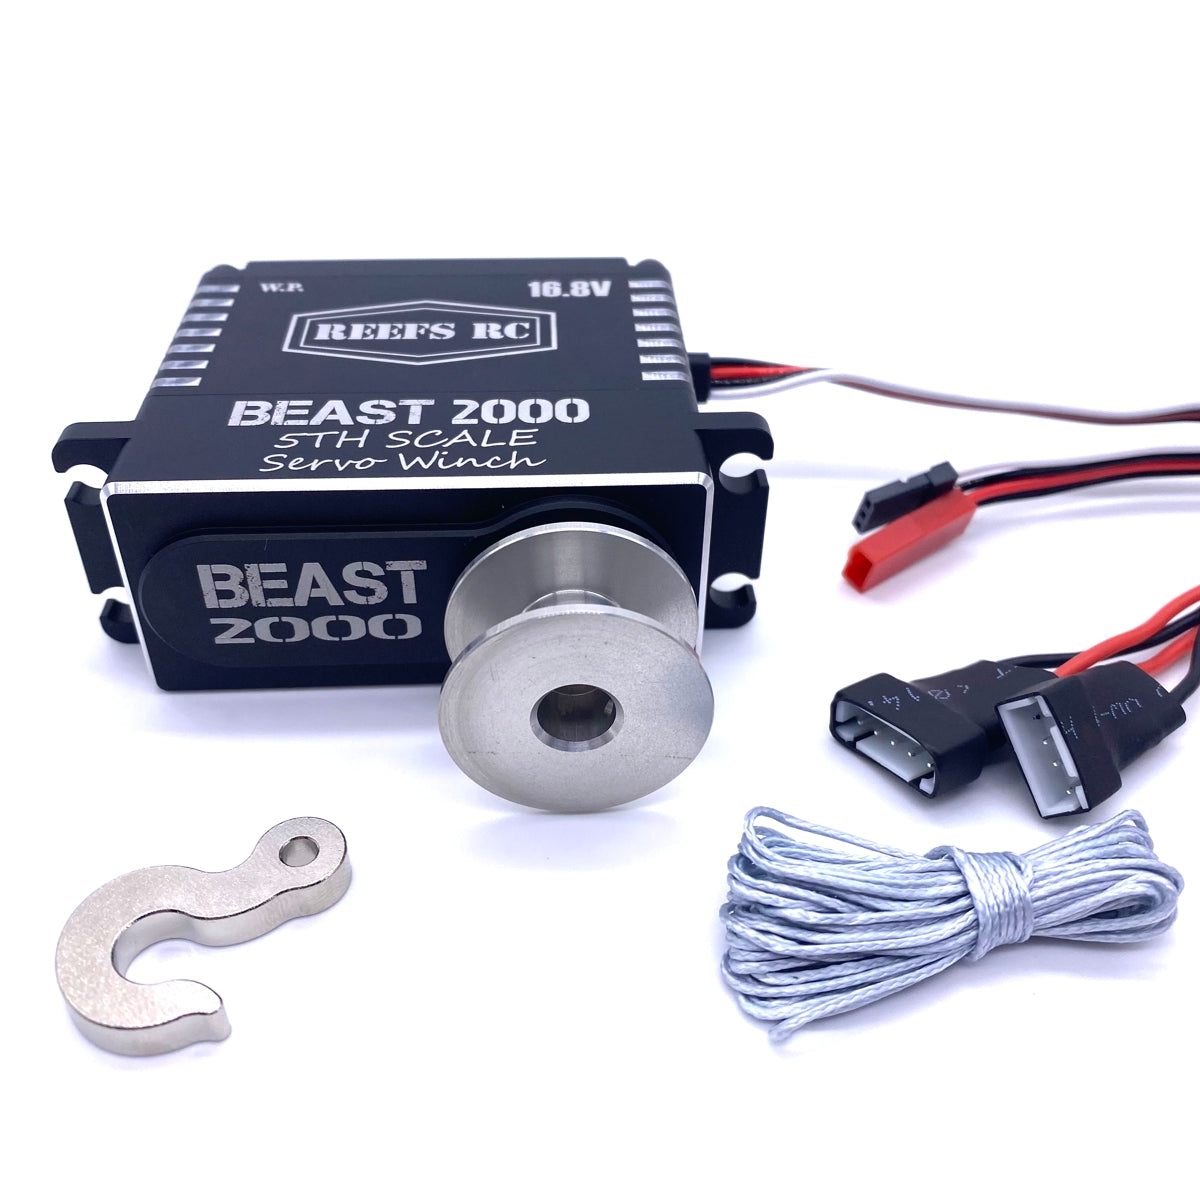 Beast 2000 1/5 Scale Servo Winch